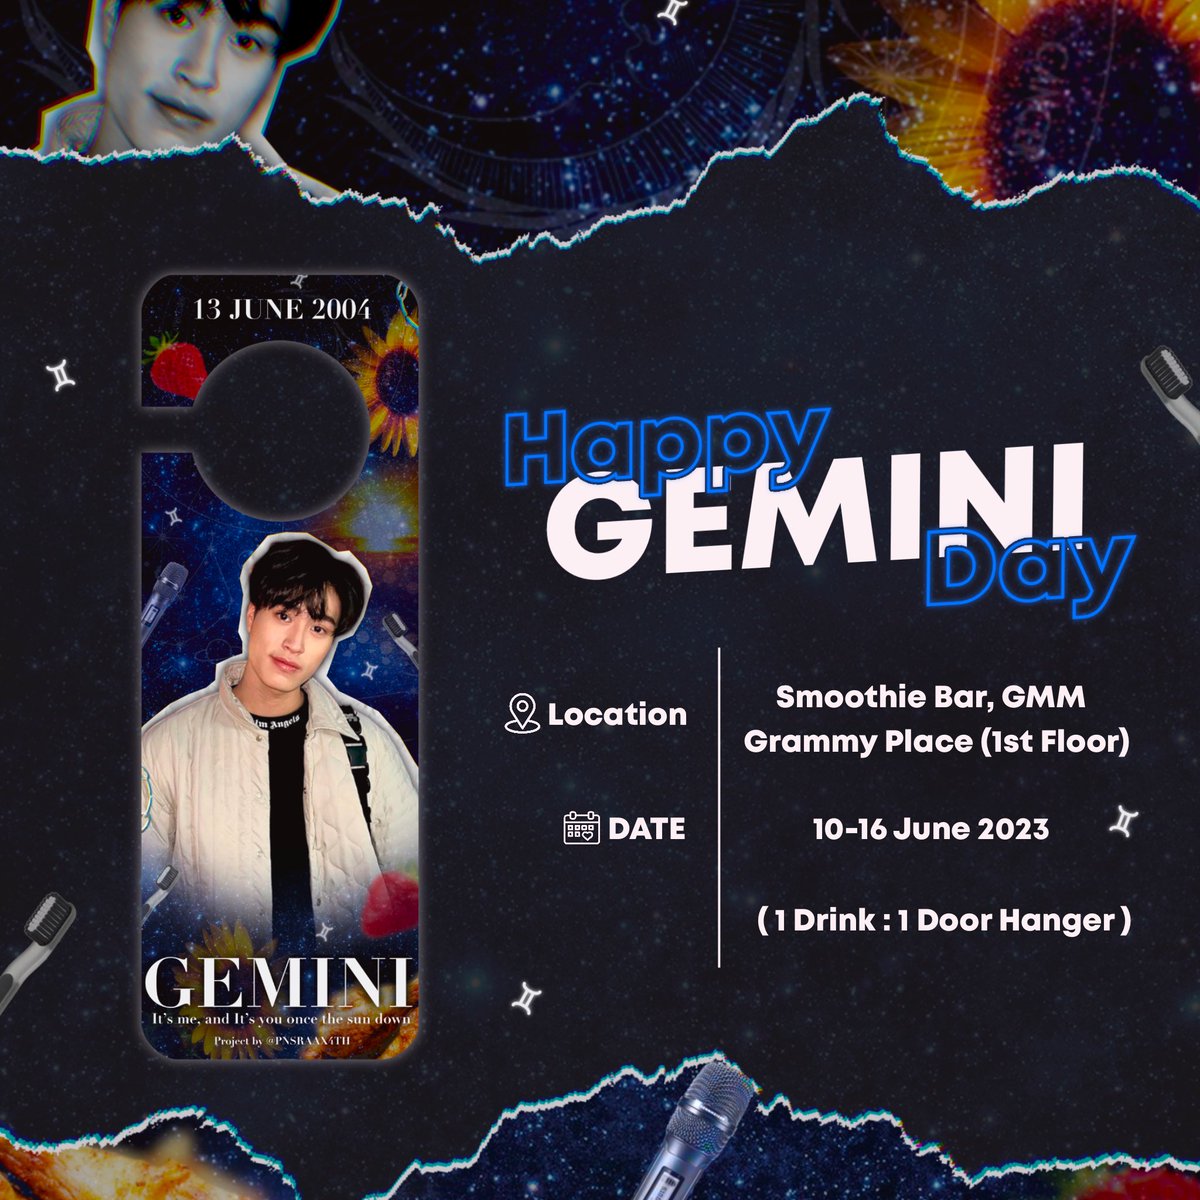 🌻 𝙃𝘼𝙋𝙋𝙔  𝙂 𝙀 𝙈 𝙄 𝙉 𝙄  𝘿𝘼𝙔  🌤
• 𝕀𝕥’𝕤 𝕞𝕖, 𝕒𝕟𝕕 𝕀𝕥’𝕤 𝕪𝕠𝕦 𝕠𝕟𝕔𝕖 𝕥𝕙𝕖 𝕤𝕦𝕟 𝕕𝕠𝕨𝕟 •

📍Smoothie Bar (ร้านน้ำพี่จ๋า)
 GMM Grammy Place 1stFloor.,
🗓 10-16 June 2023
🥤 1 Drink = 1 Door Hanger 

#Gemini_NT 
#เจมีไนน์ 
#Gemini19thBDProject